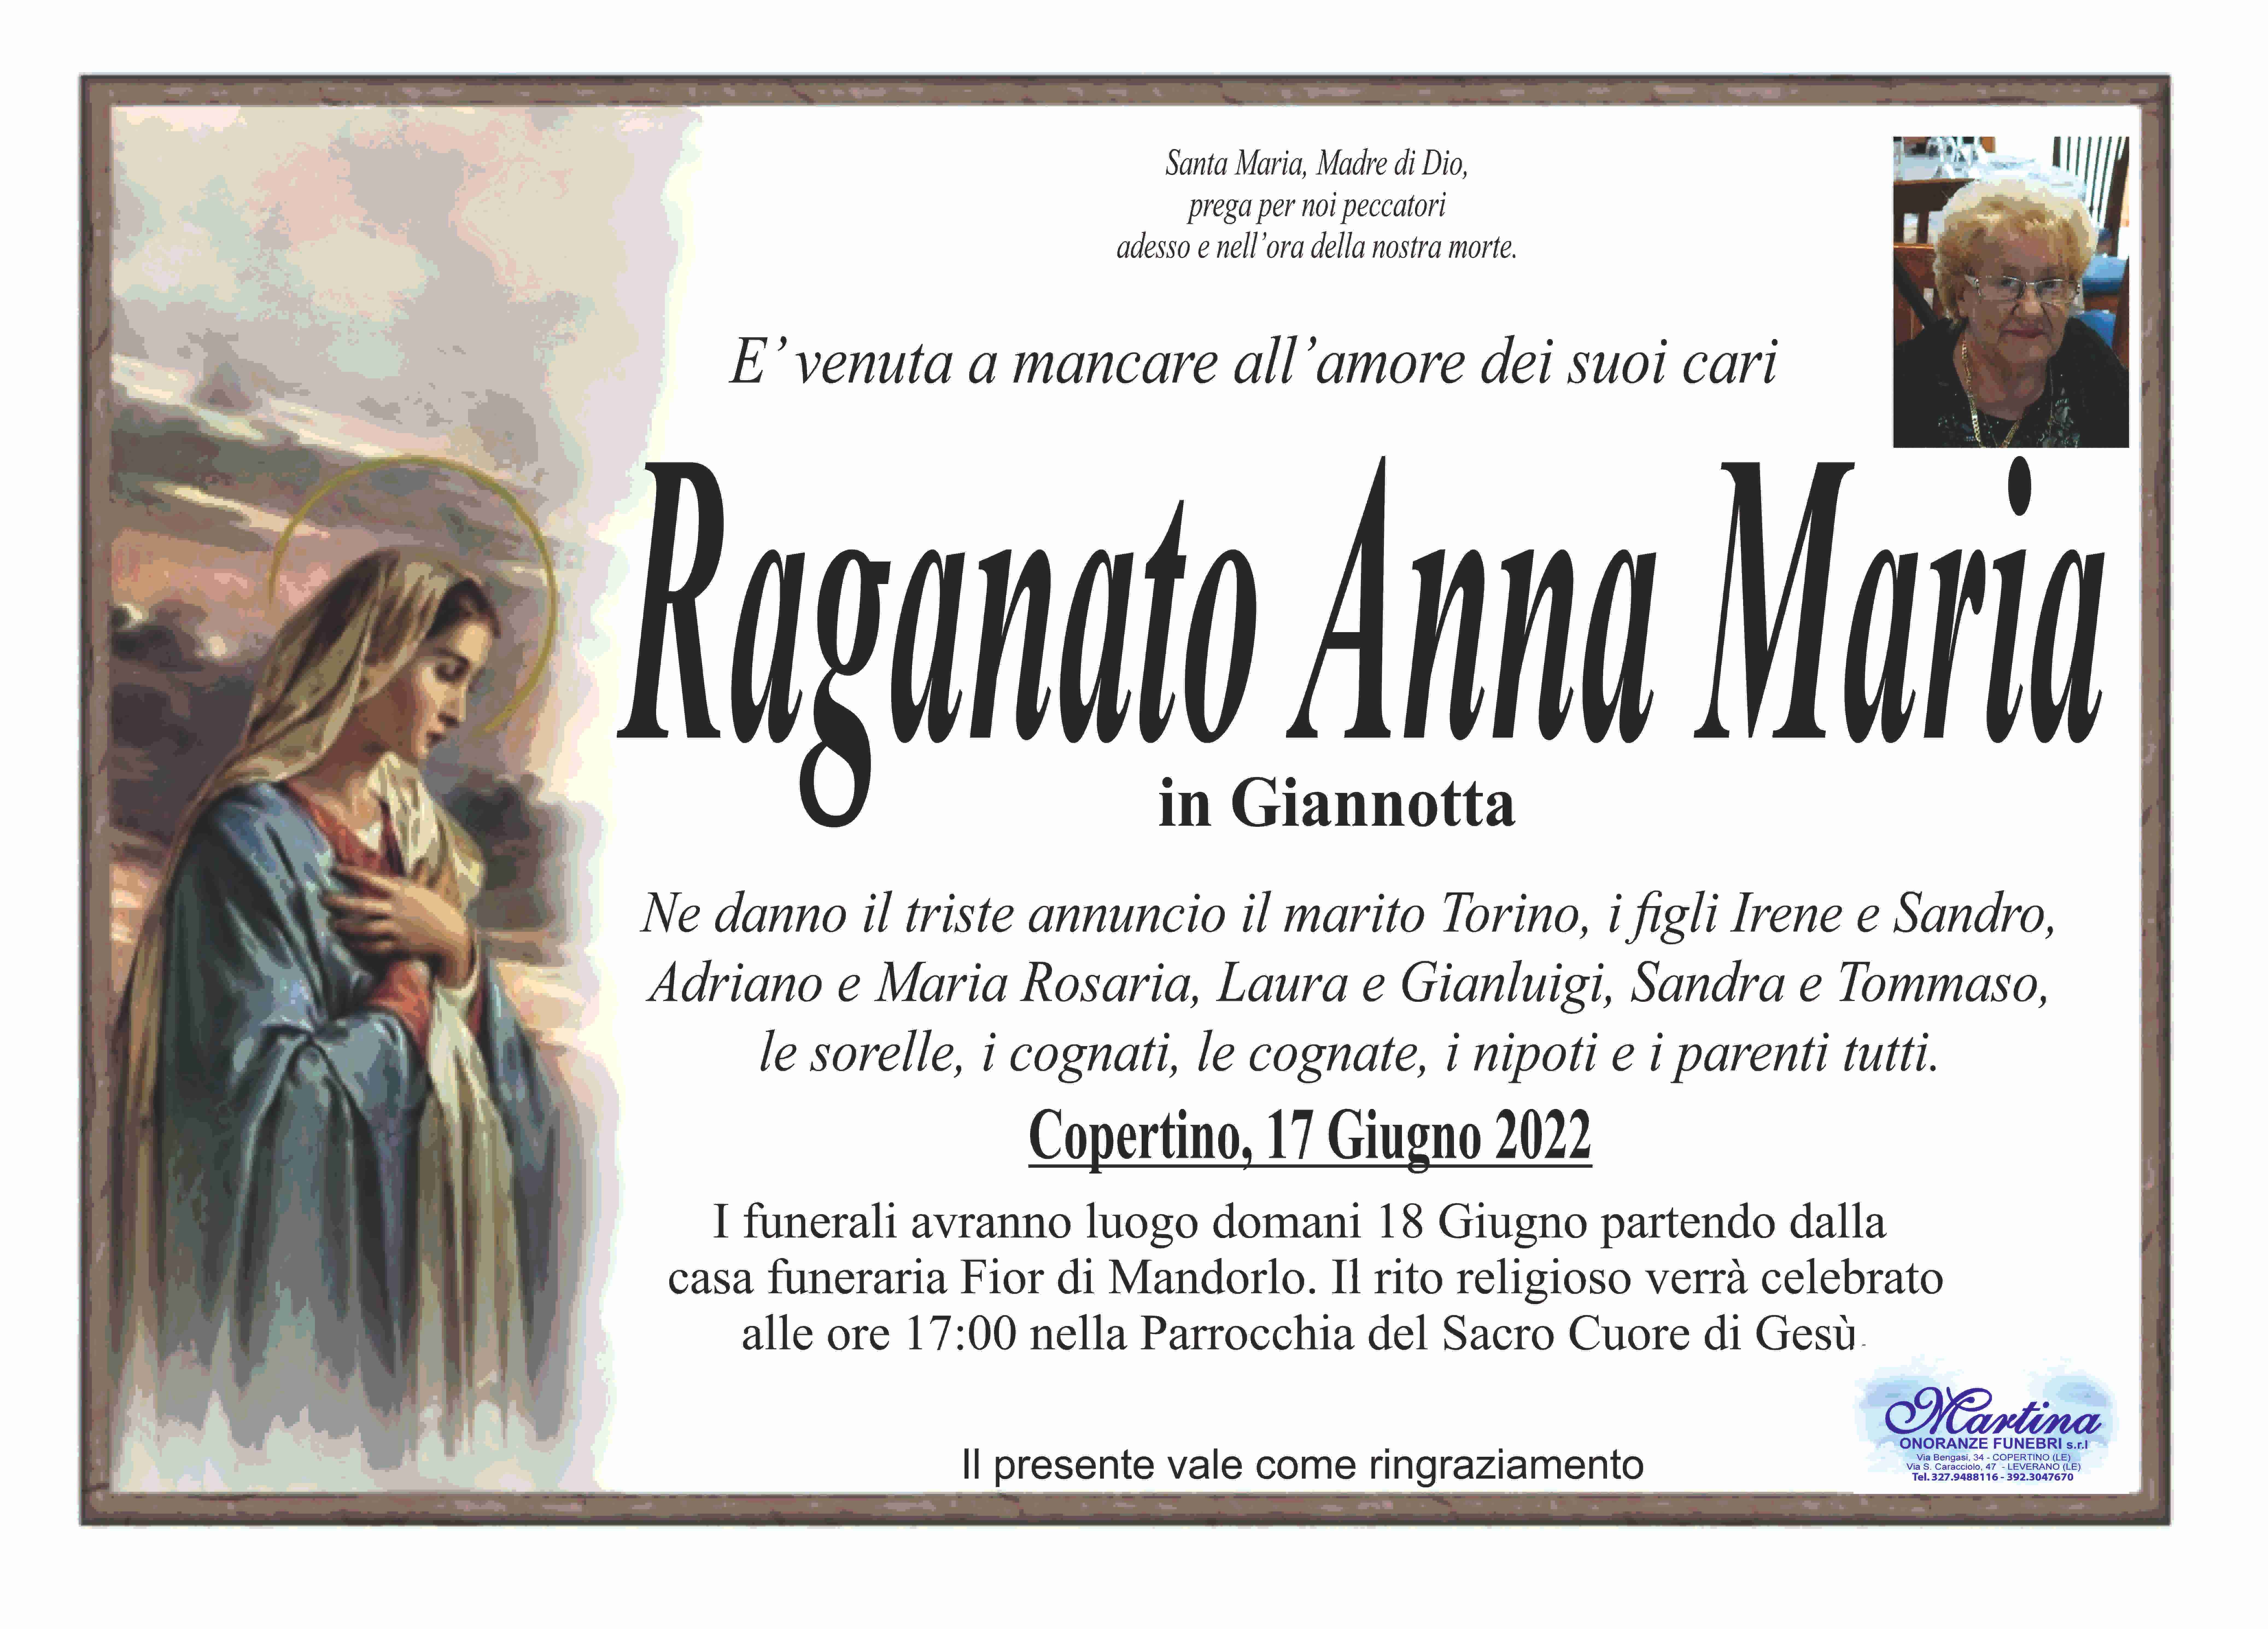 Anna Maria Raganato